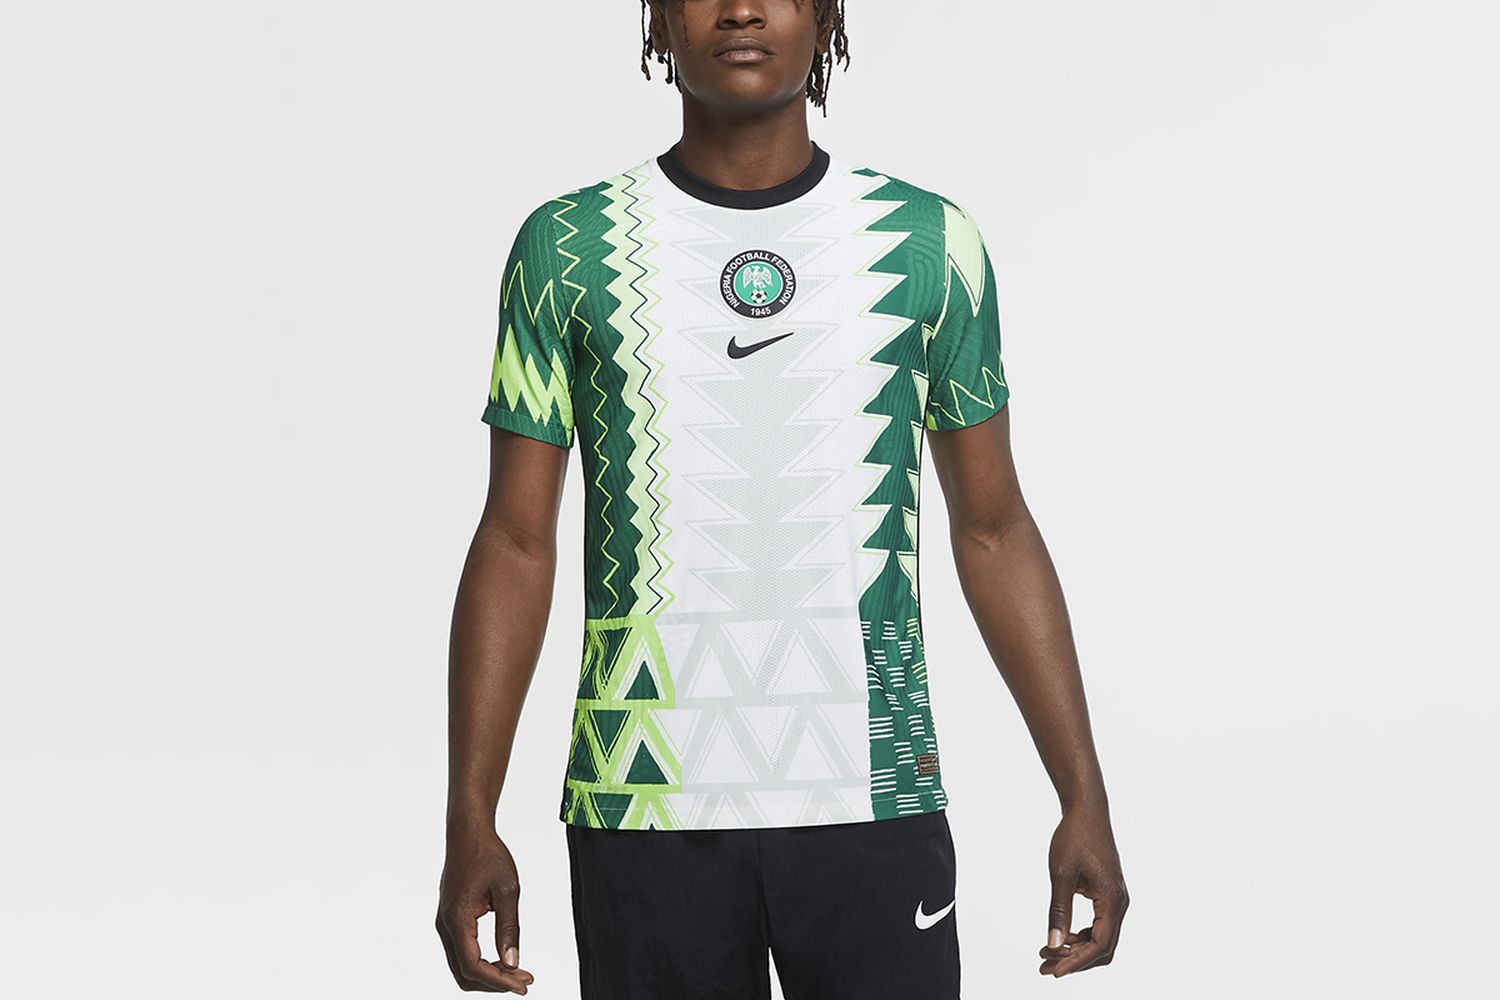 En cualquier momento Superior cuota de matrícula Nike Nigeria 2020 Naija Collection: Official Images & Release Info